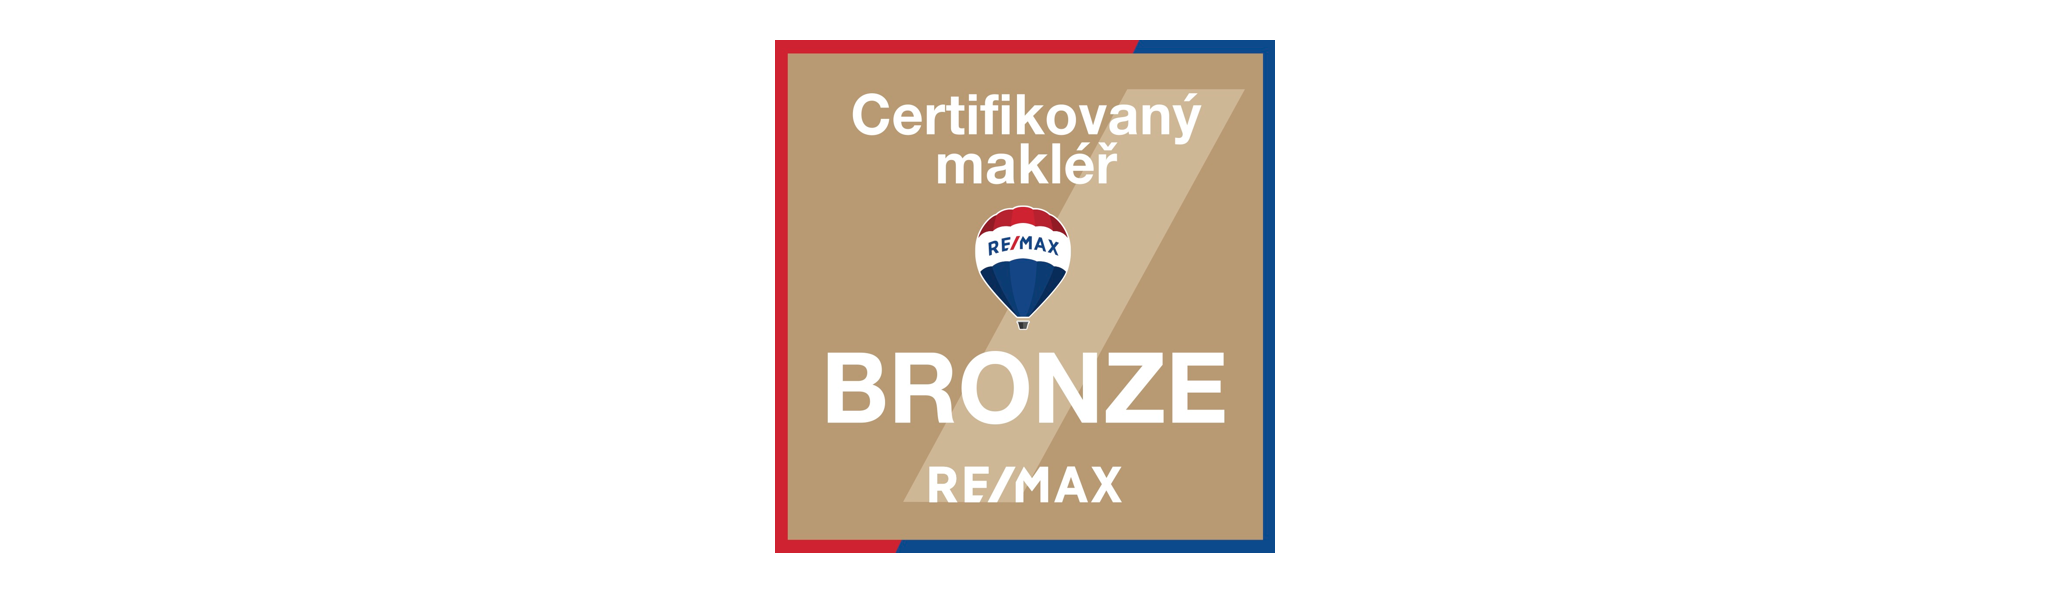 Certifikovaný makléř Bronze